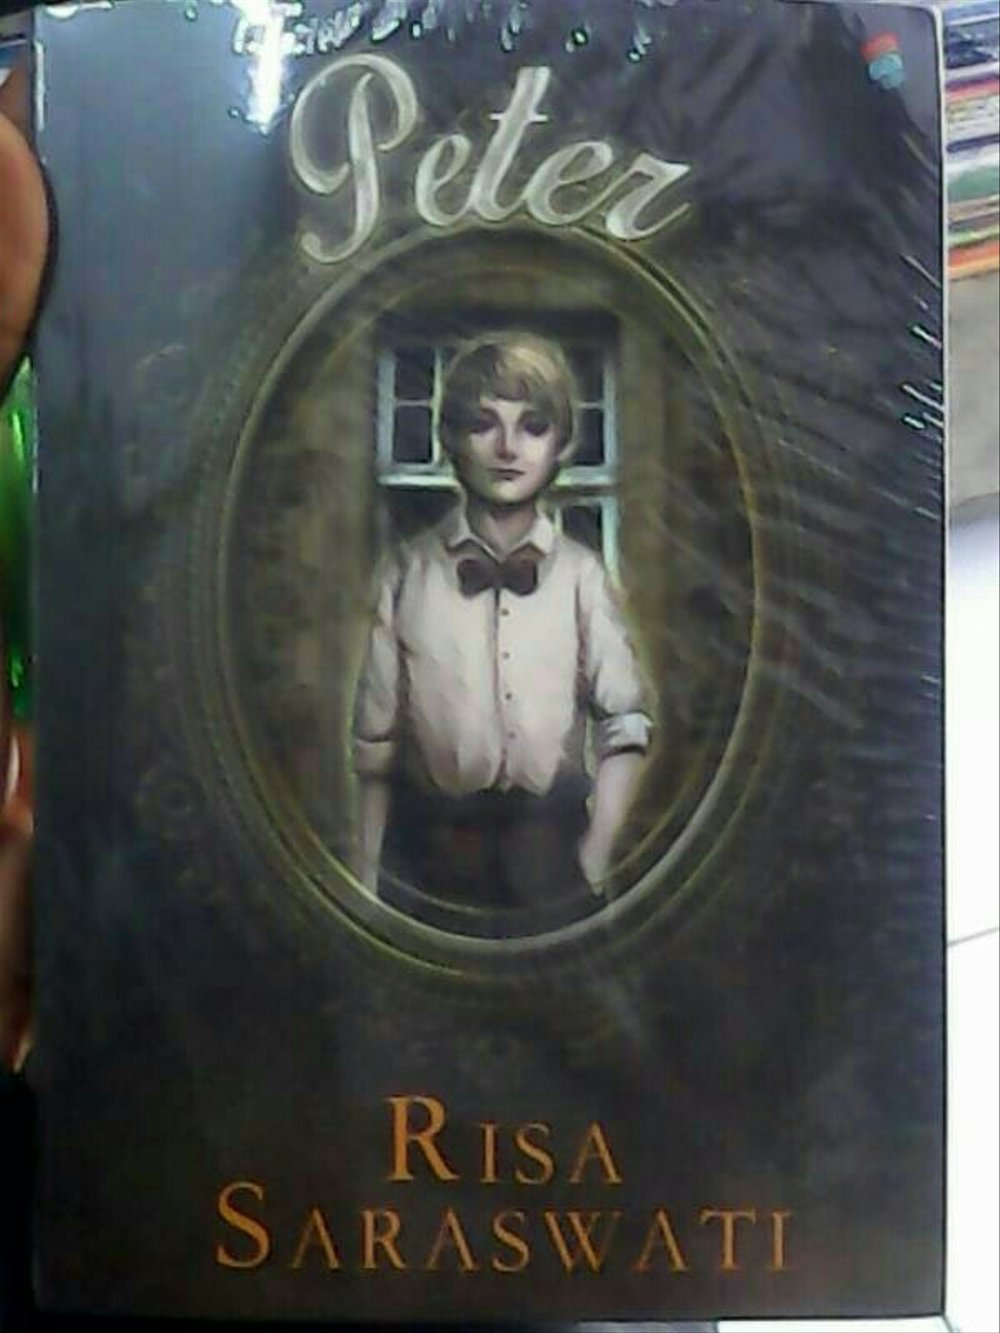 download novel peter risa saraswati pdf